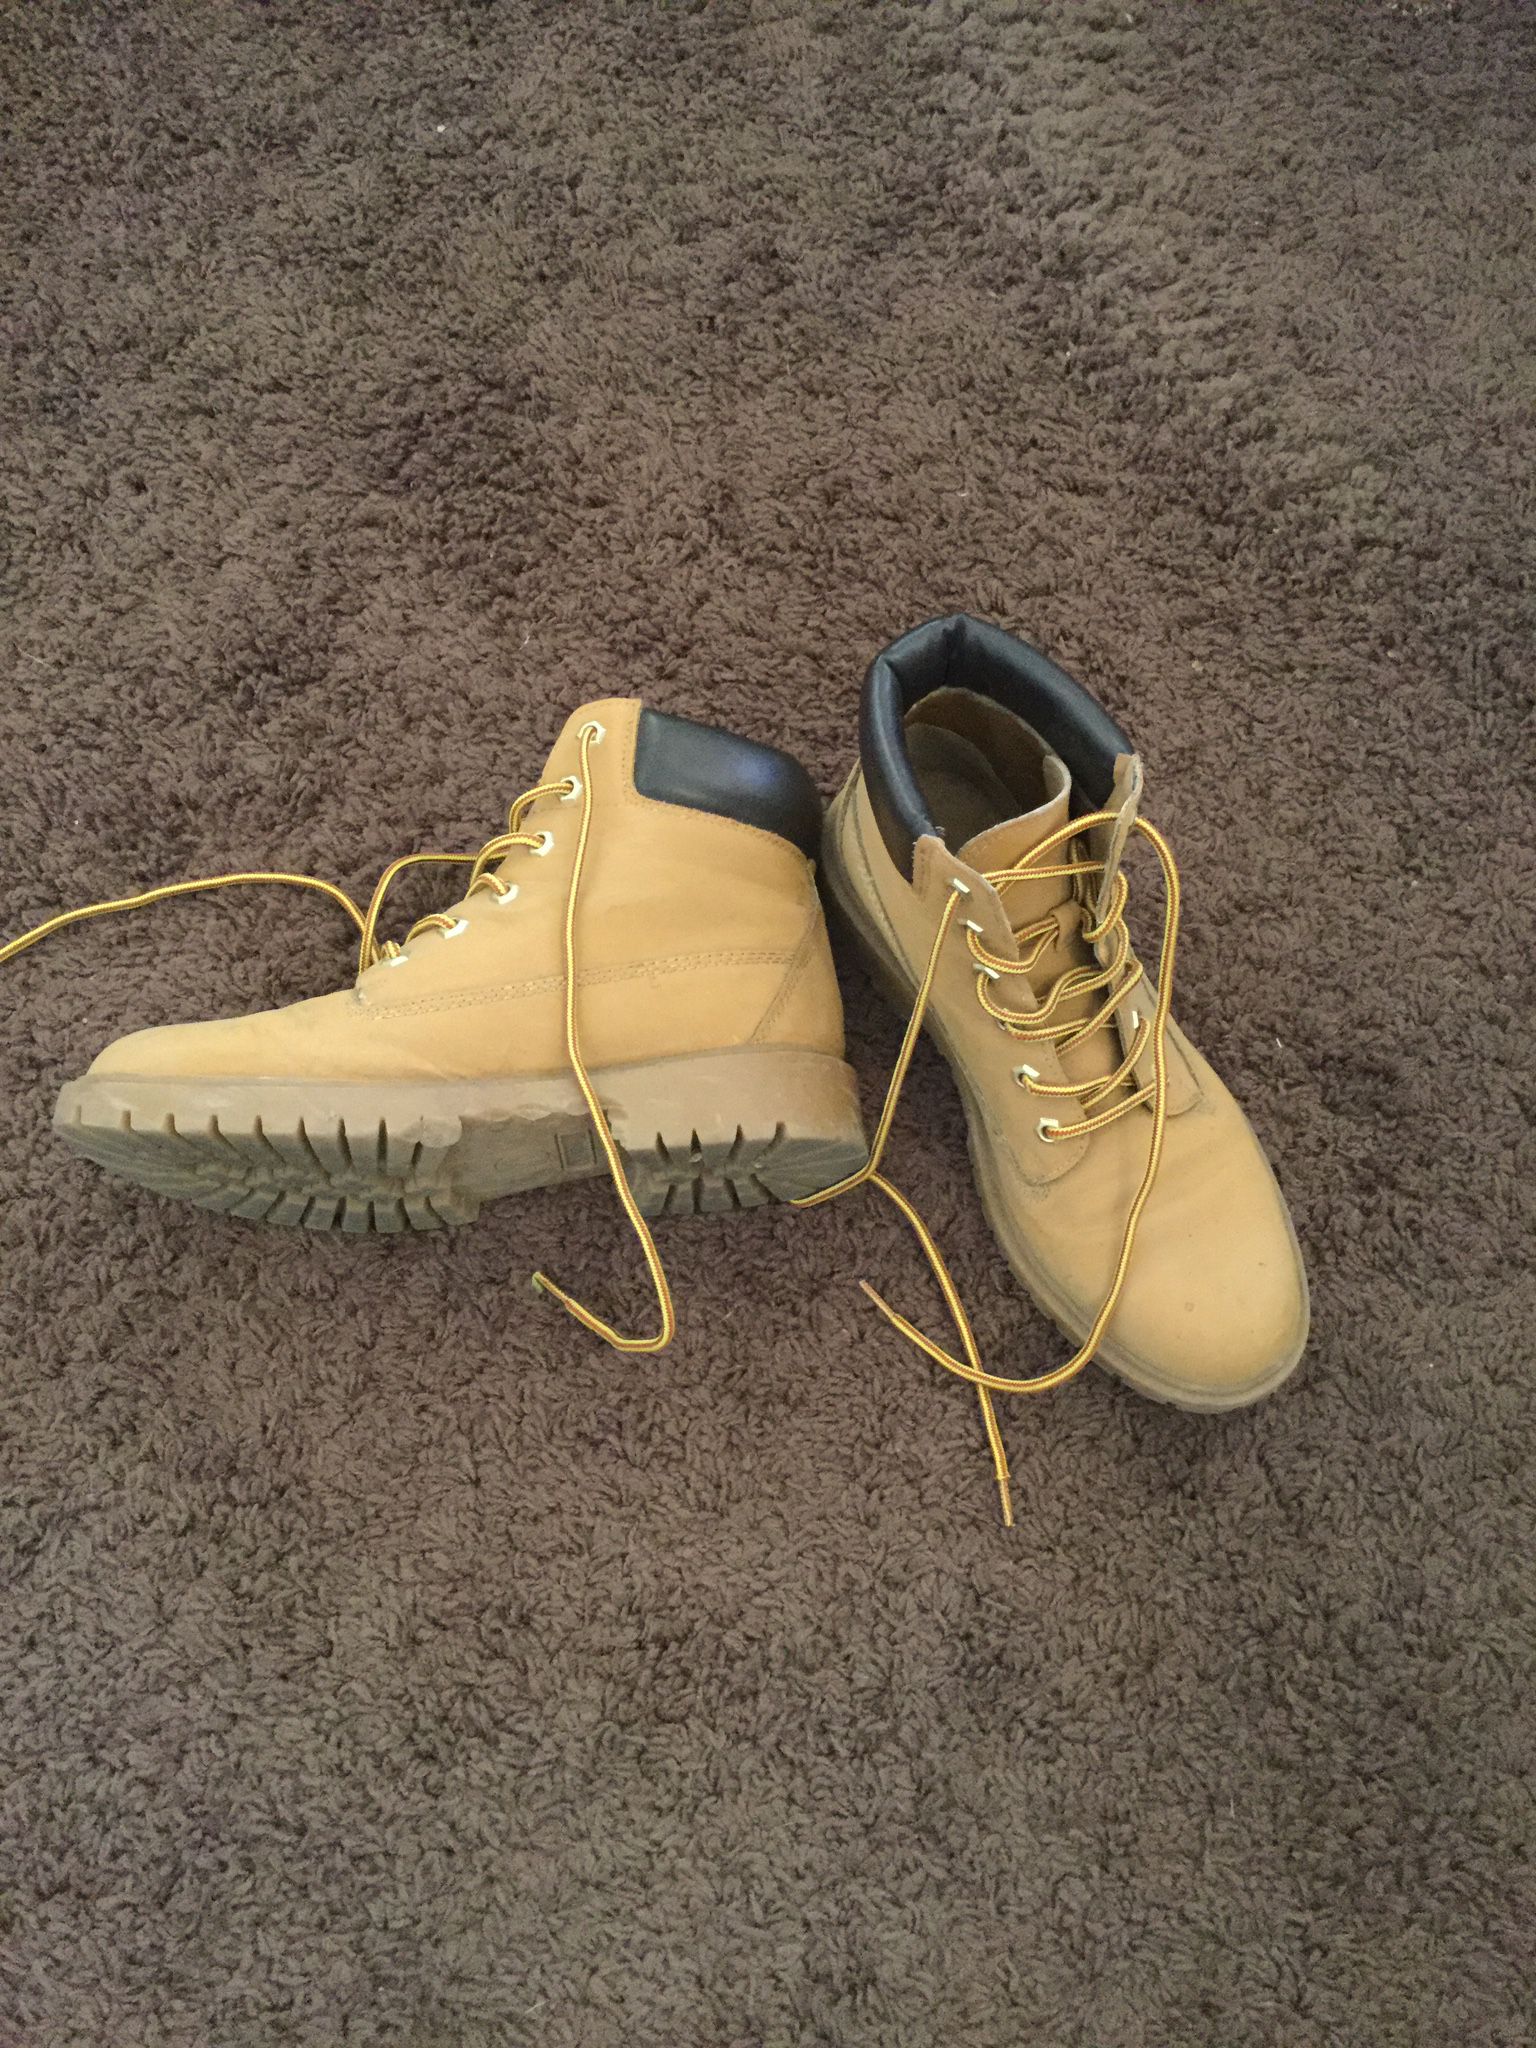 Women’s Telluride Boots - Size 8